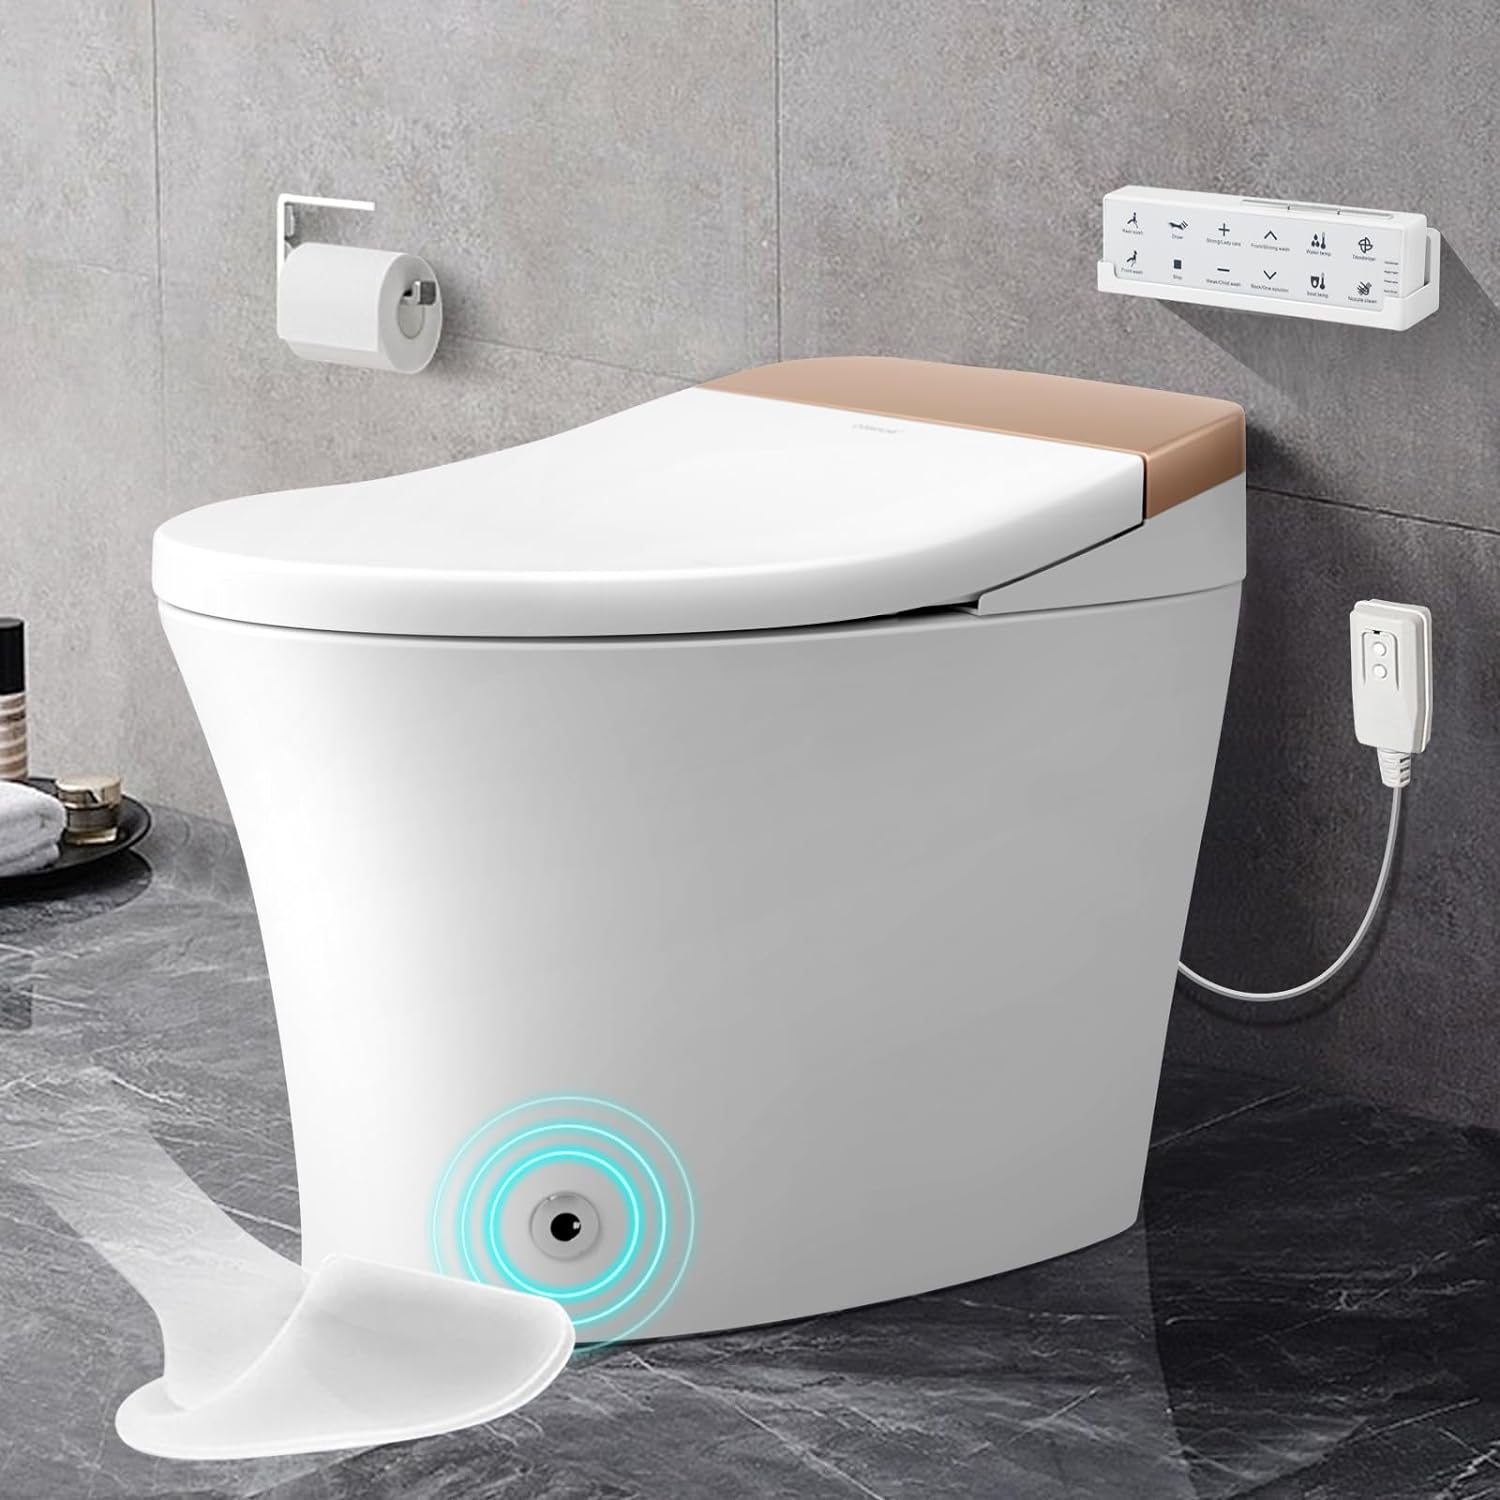 Smart Toilet Bidet Toilet Foot Sensor Flush Heated Seat Multi Function Remote Control Soft Closing Seat Smart Bidet Automatic Flushing